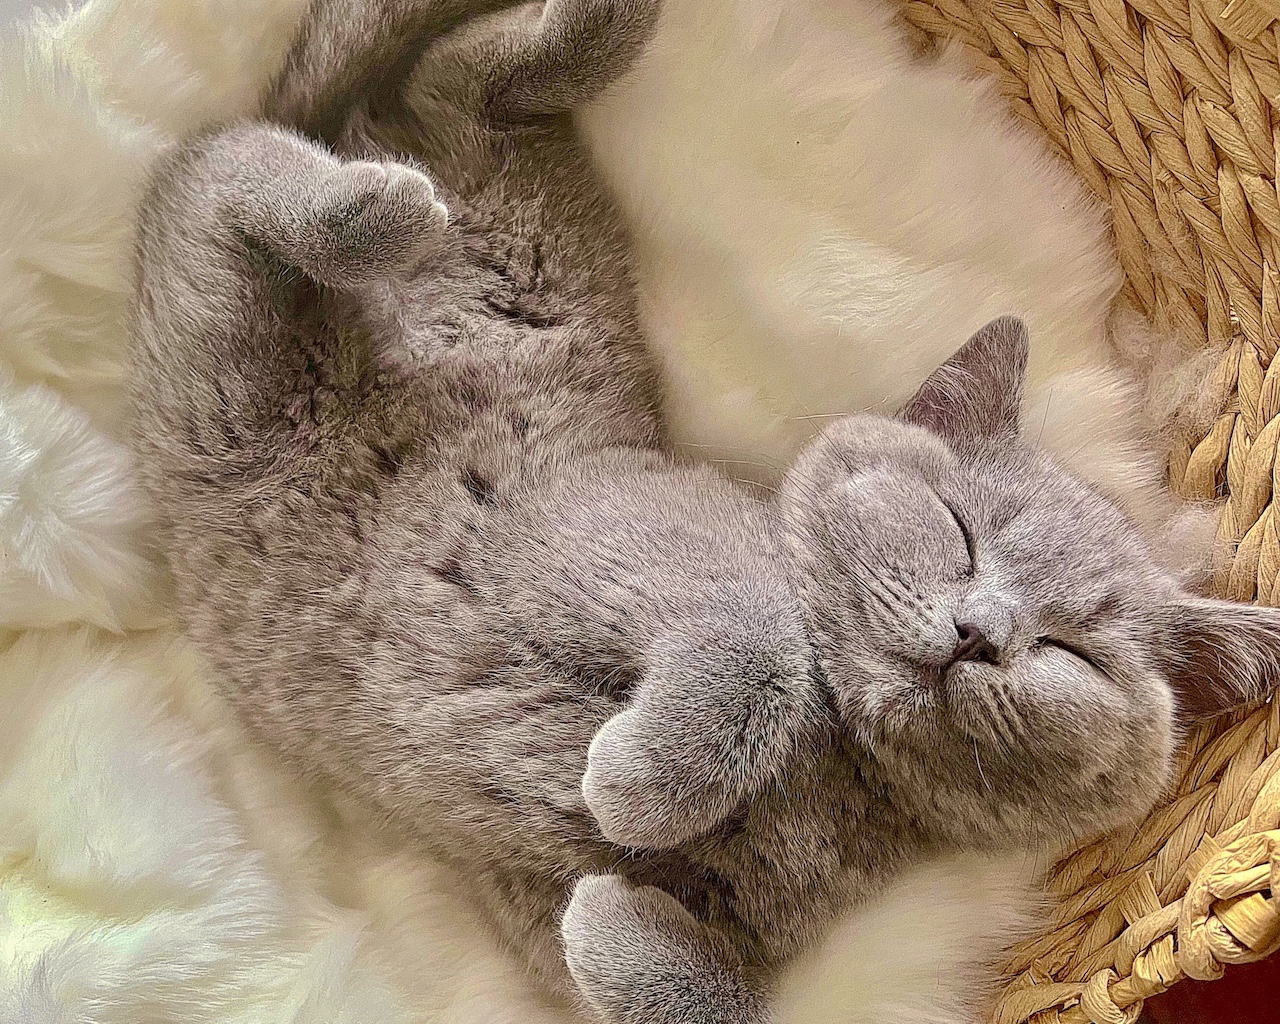 sleeping adorable british kitten